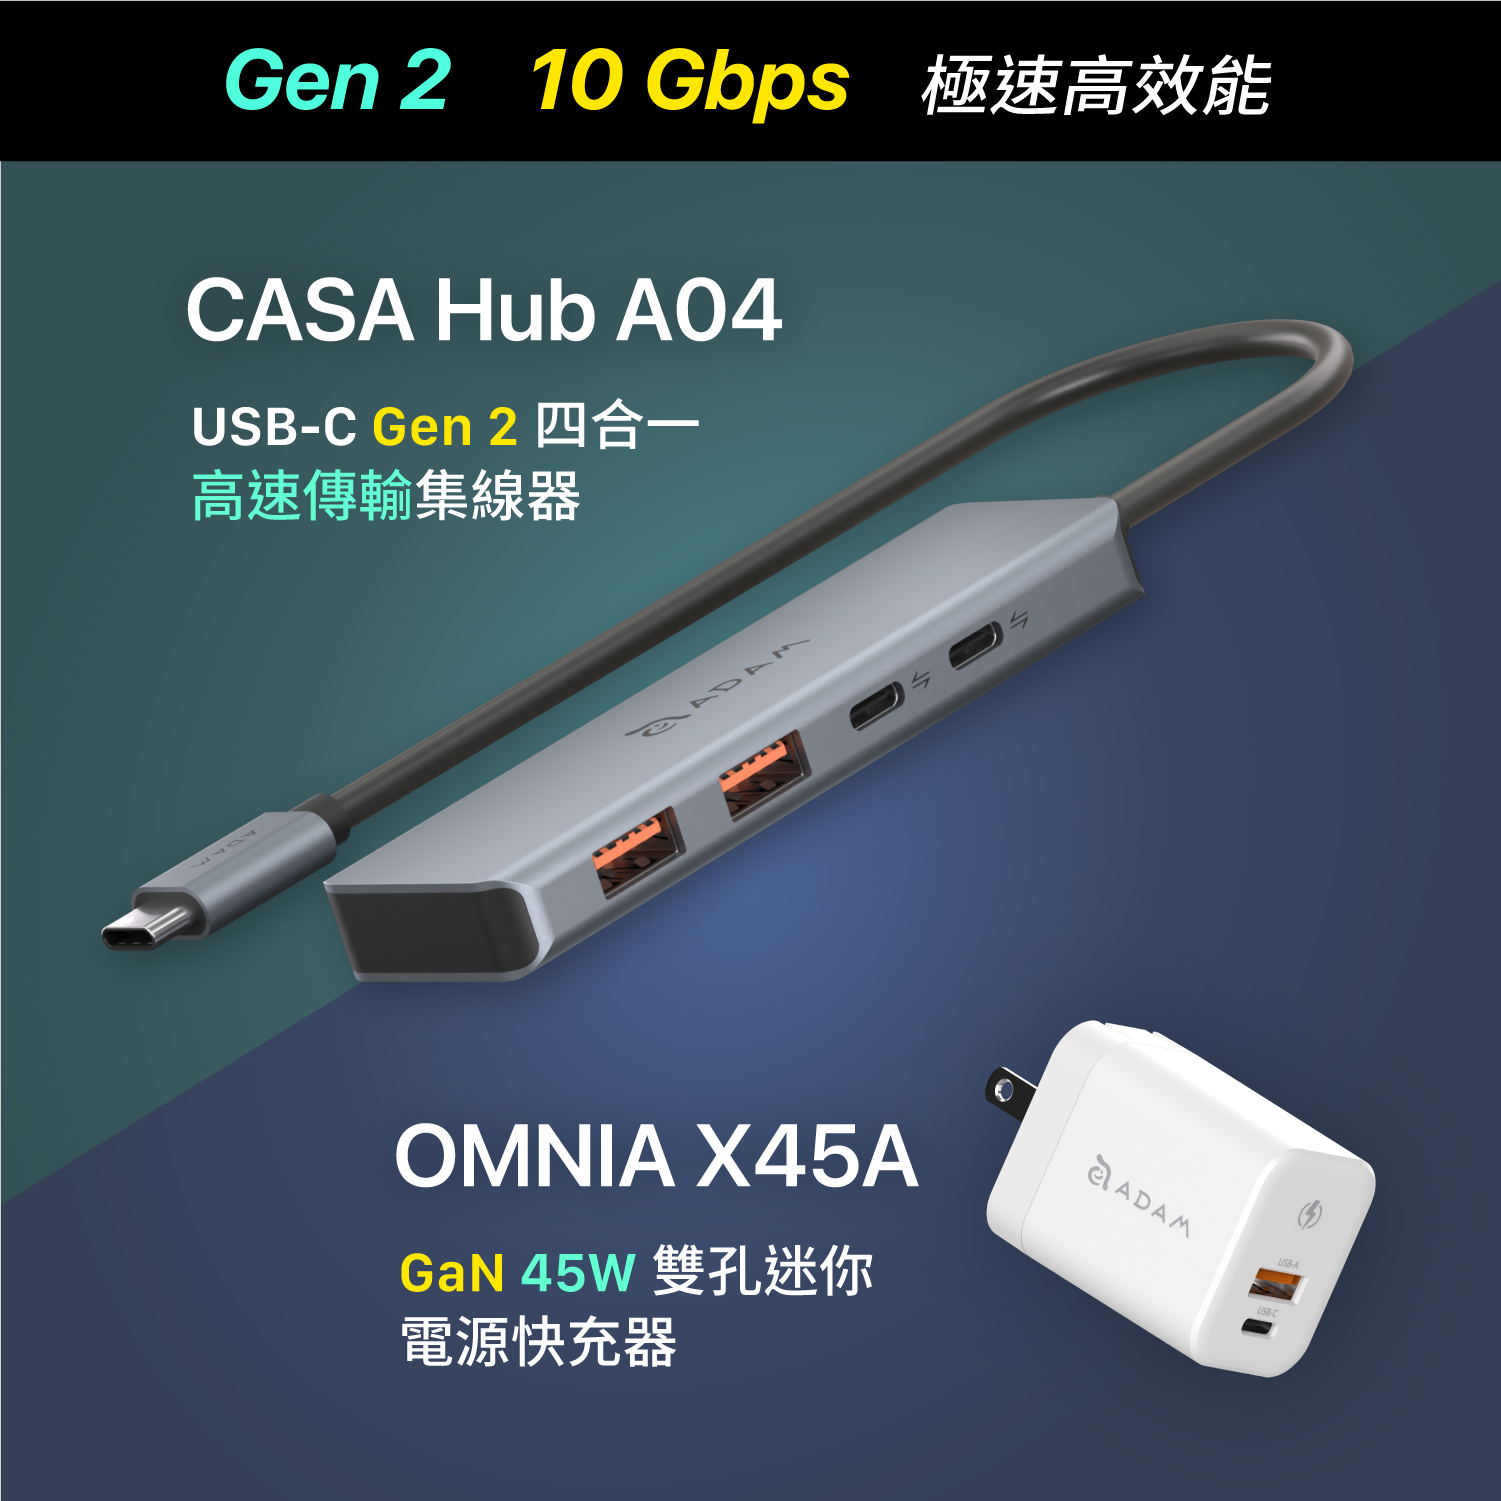 CASA Hub A04 USB-C Gen2 四合一高速集線器_OMNIA X45A GaN 45W 雙孔迷你快速電源供應器